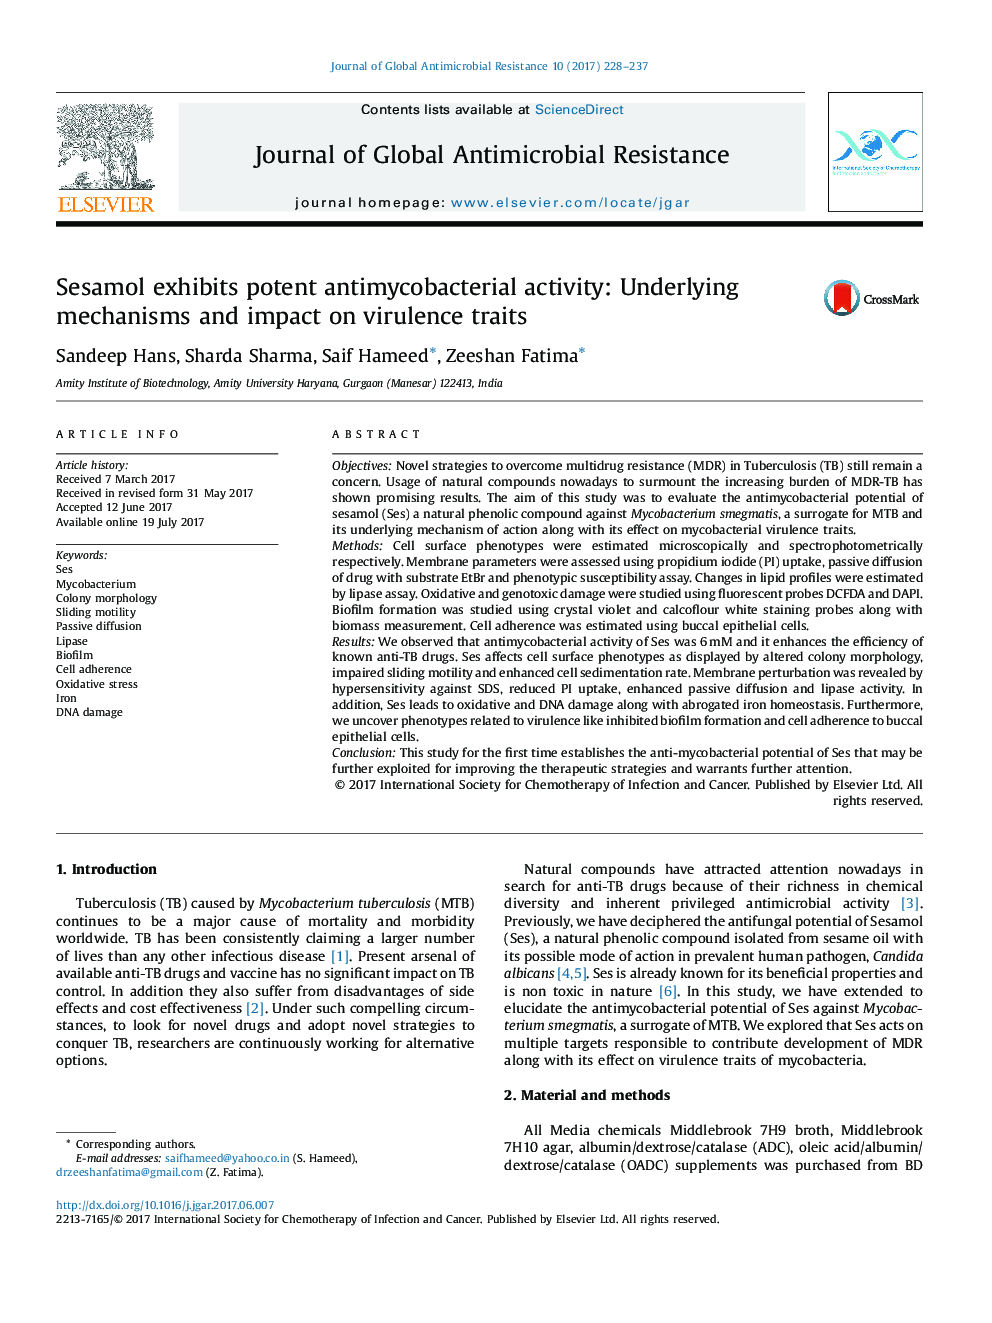 Sesamol exhibits potent antimycobacterial activity: Underlying mechanisms and impact on virulence traits